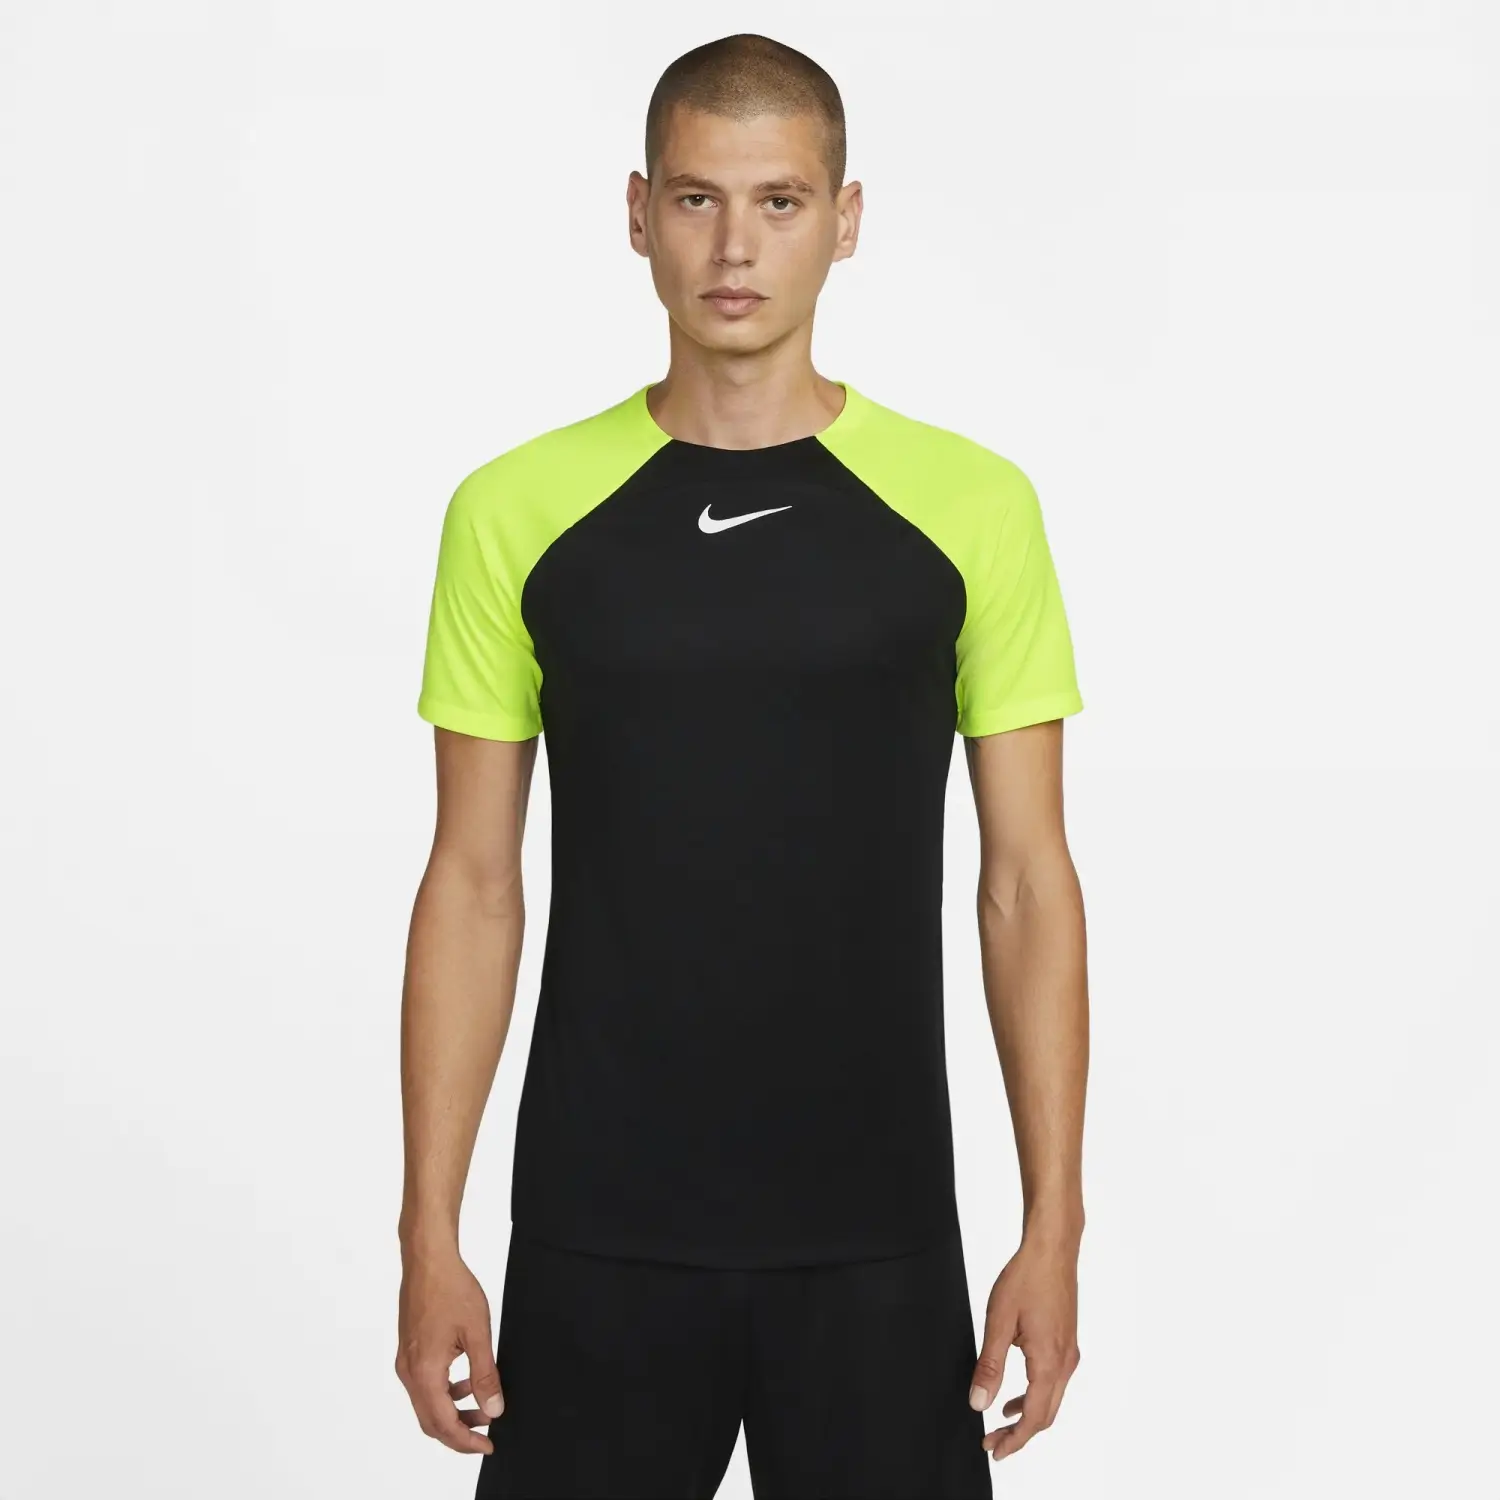  Nike Dri-FIT Academy Pro Siyah Erkek Tişörtü  -DH9225-010